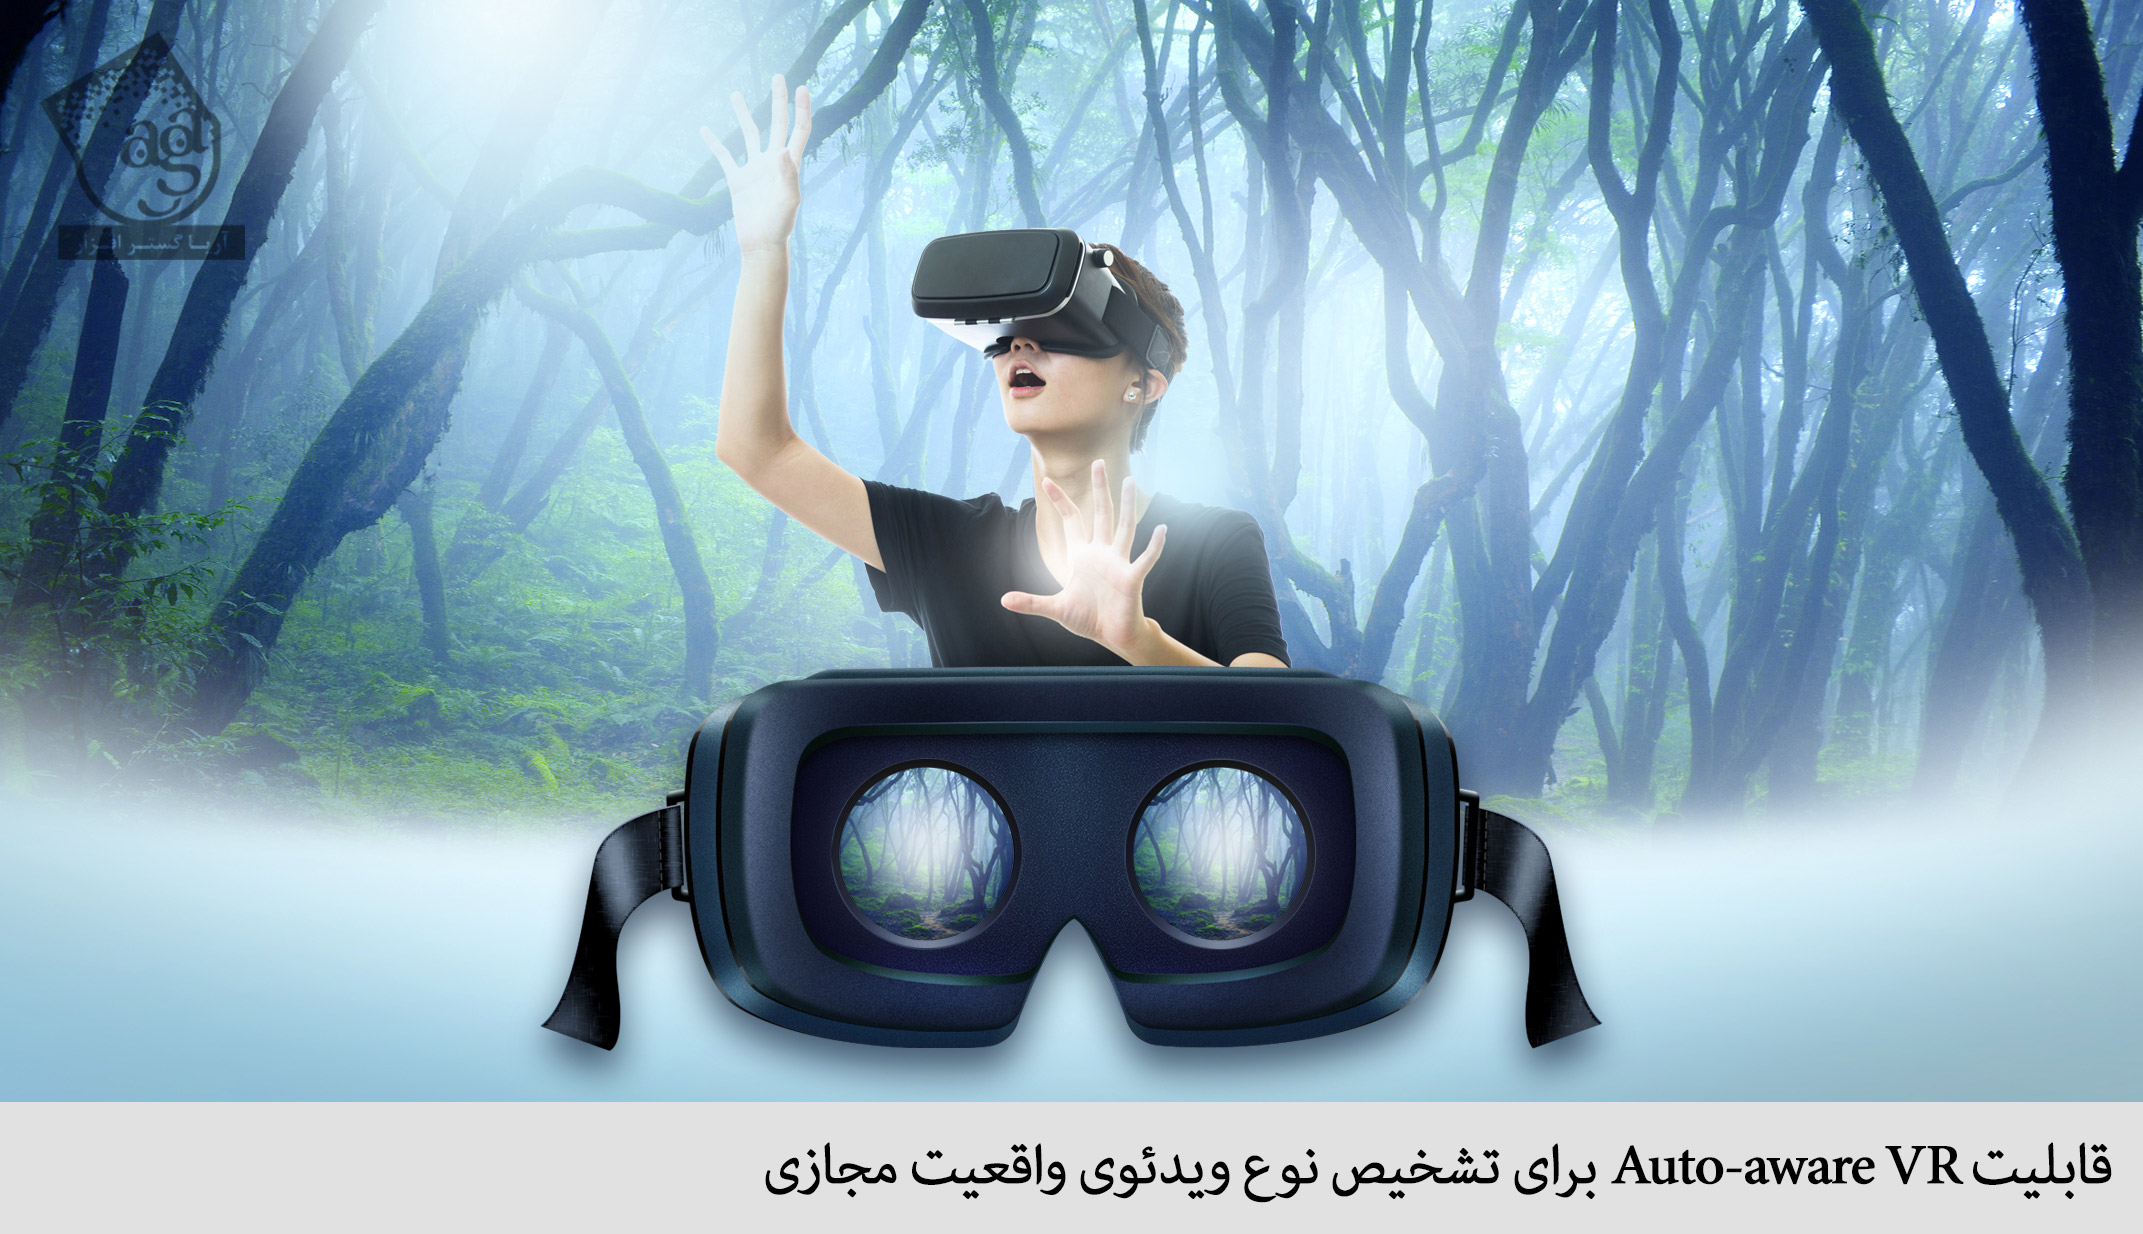 Vr объект. Виар очки вр360. Очки виртуальной реальности для детей. Очки виртуальной реальности на человеке. Вид в очках виртуальной реальности.